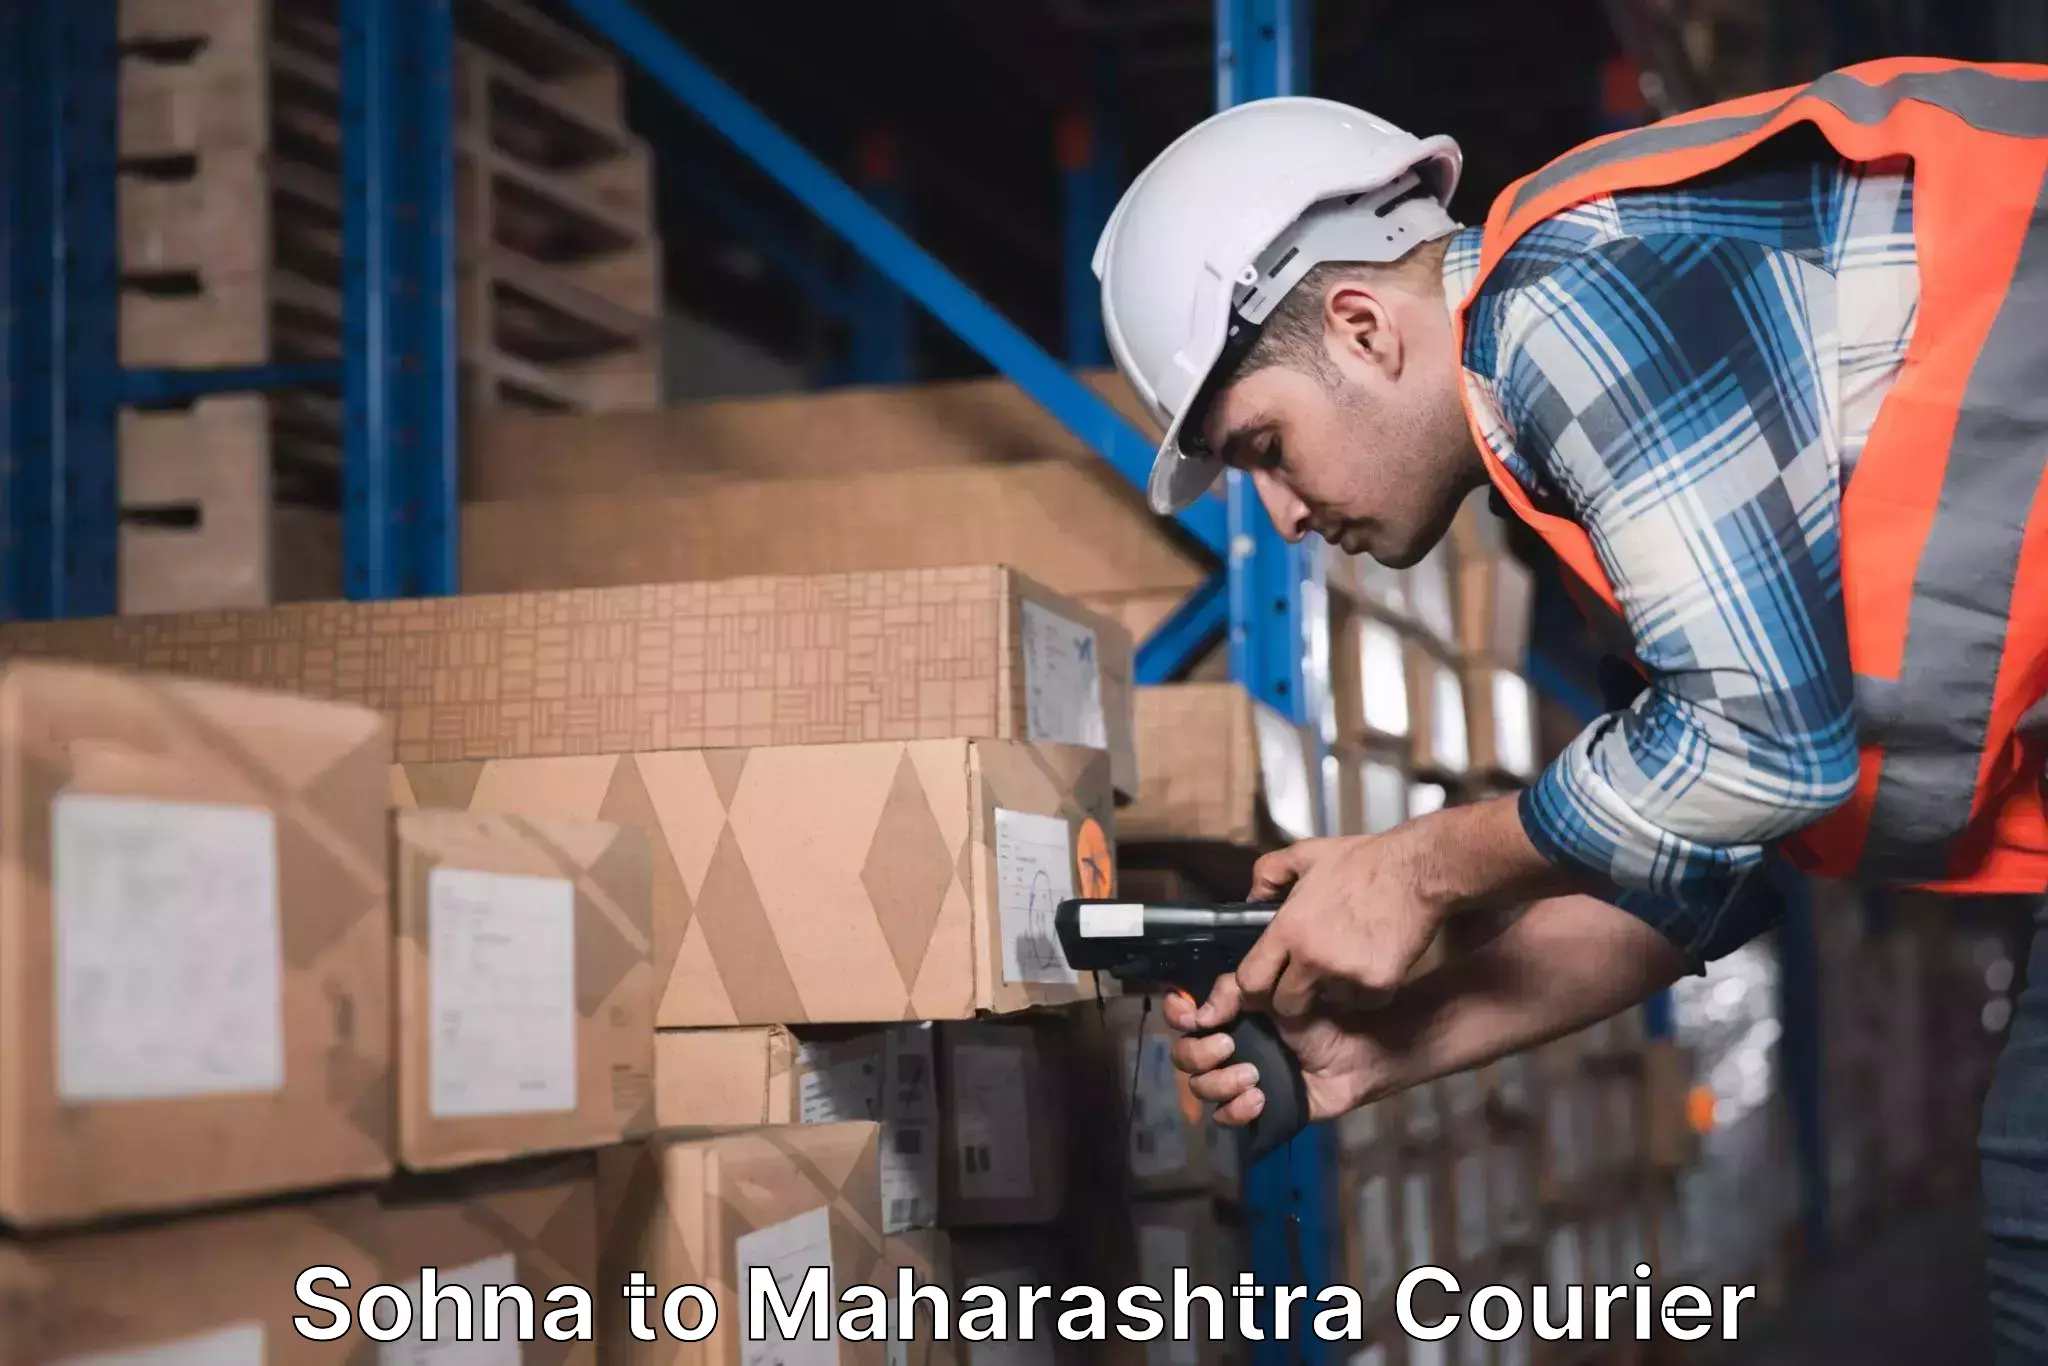 Courier membership Sohna to Tata Institute of Social Sciences Mumbai